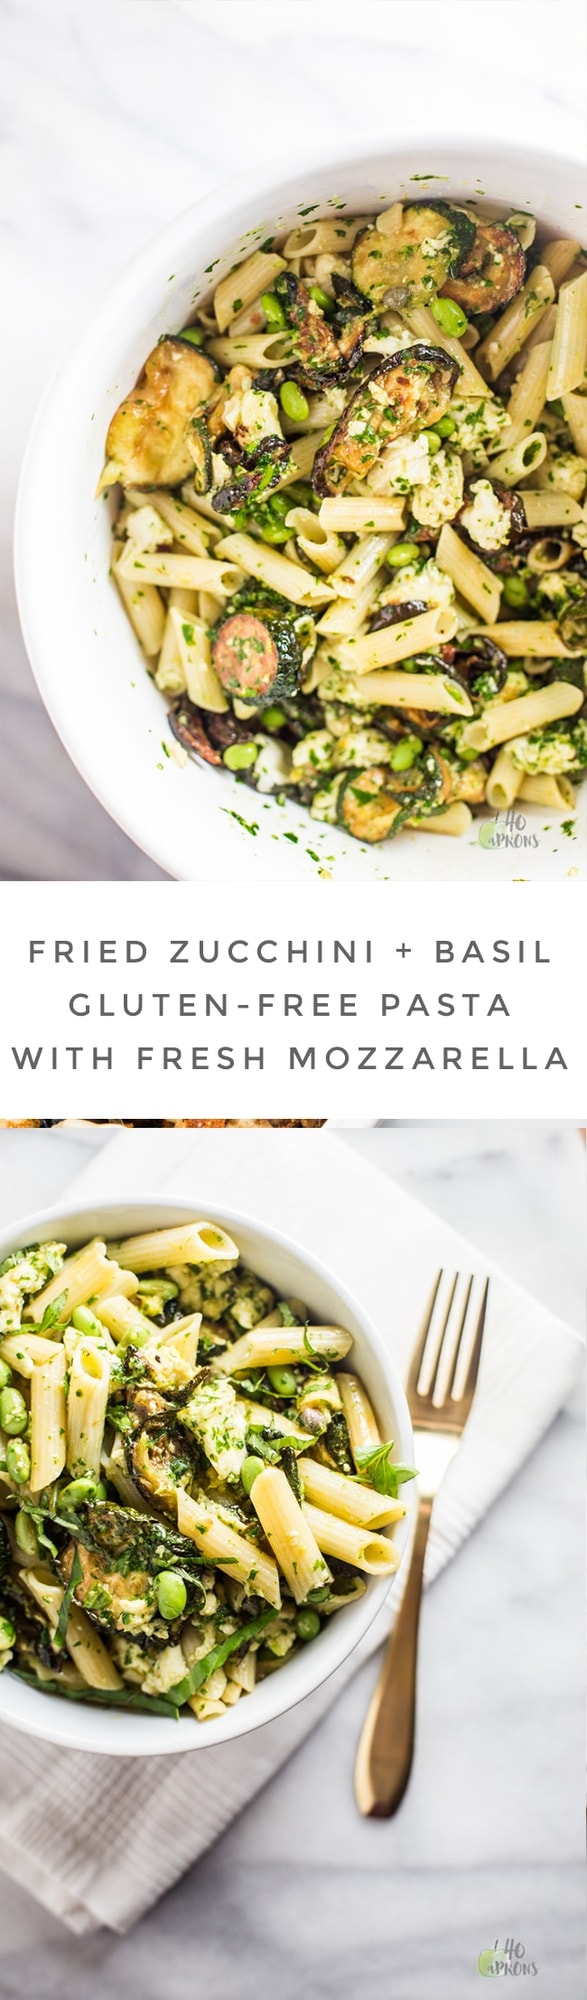 Fried Zucchini Basil Gluten-Free Pasta with Fresh Mozzarella